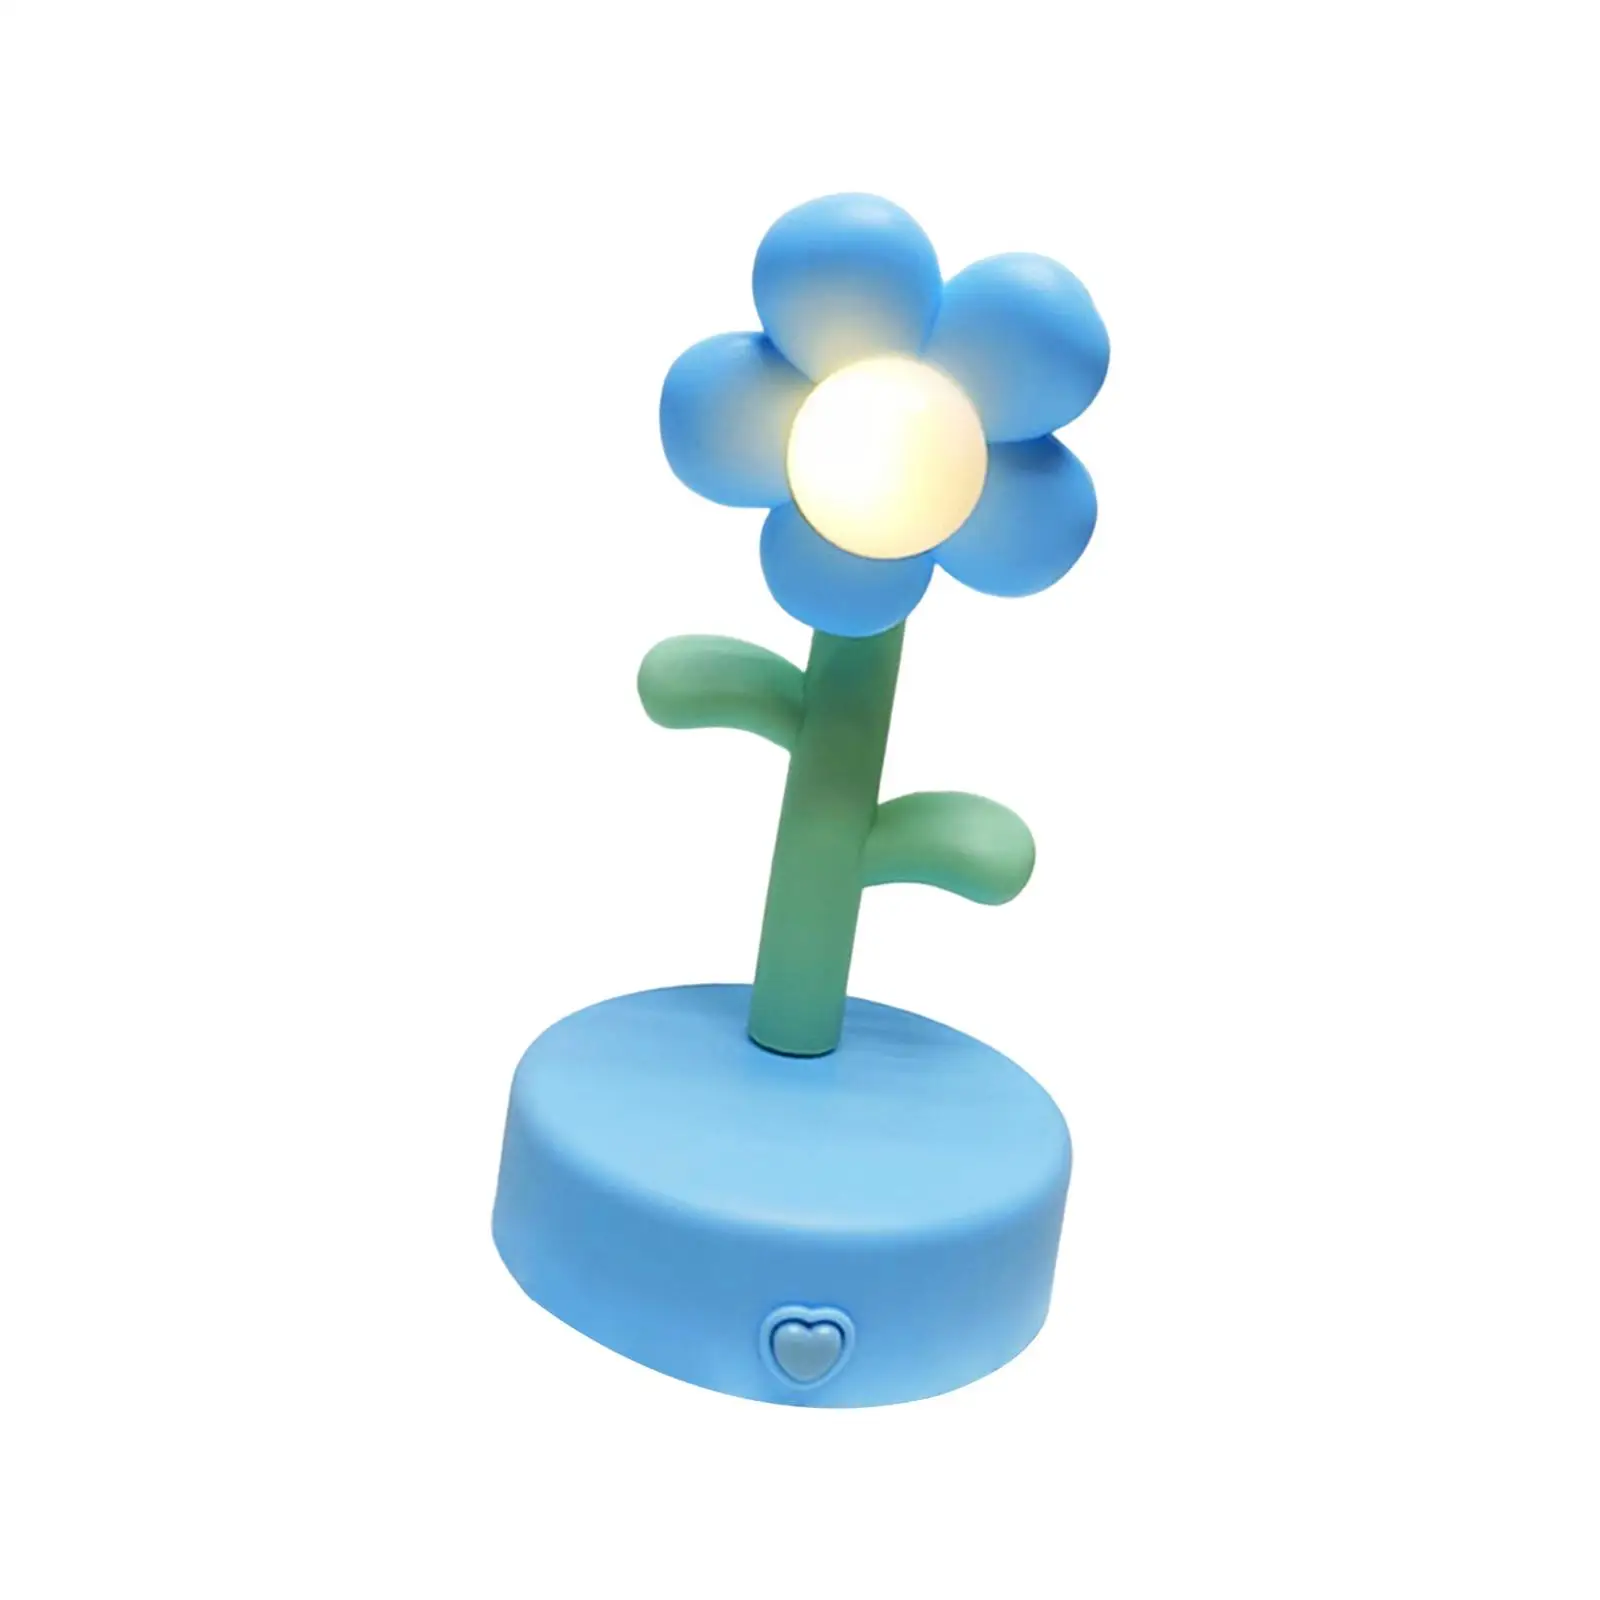 Creative Flower Table Lamp Night Light Portable NightStand Lamp Desk Lamp for Living Room Bedroom Dorm Decoration Kids Gift